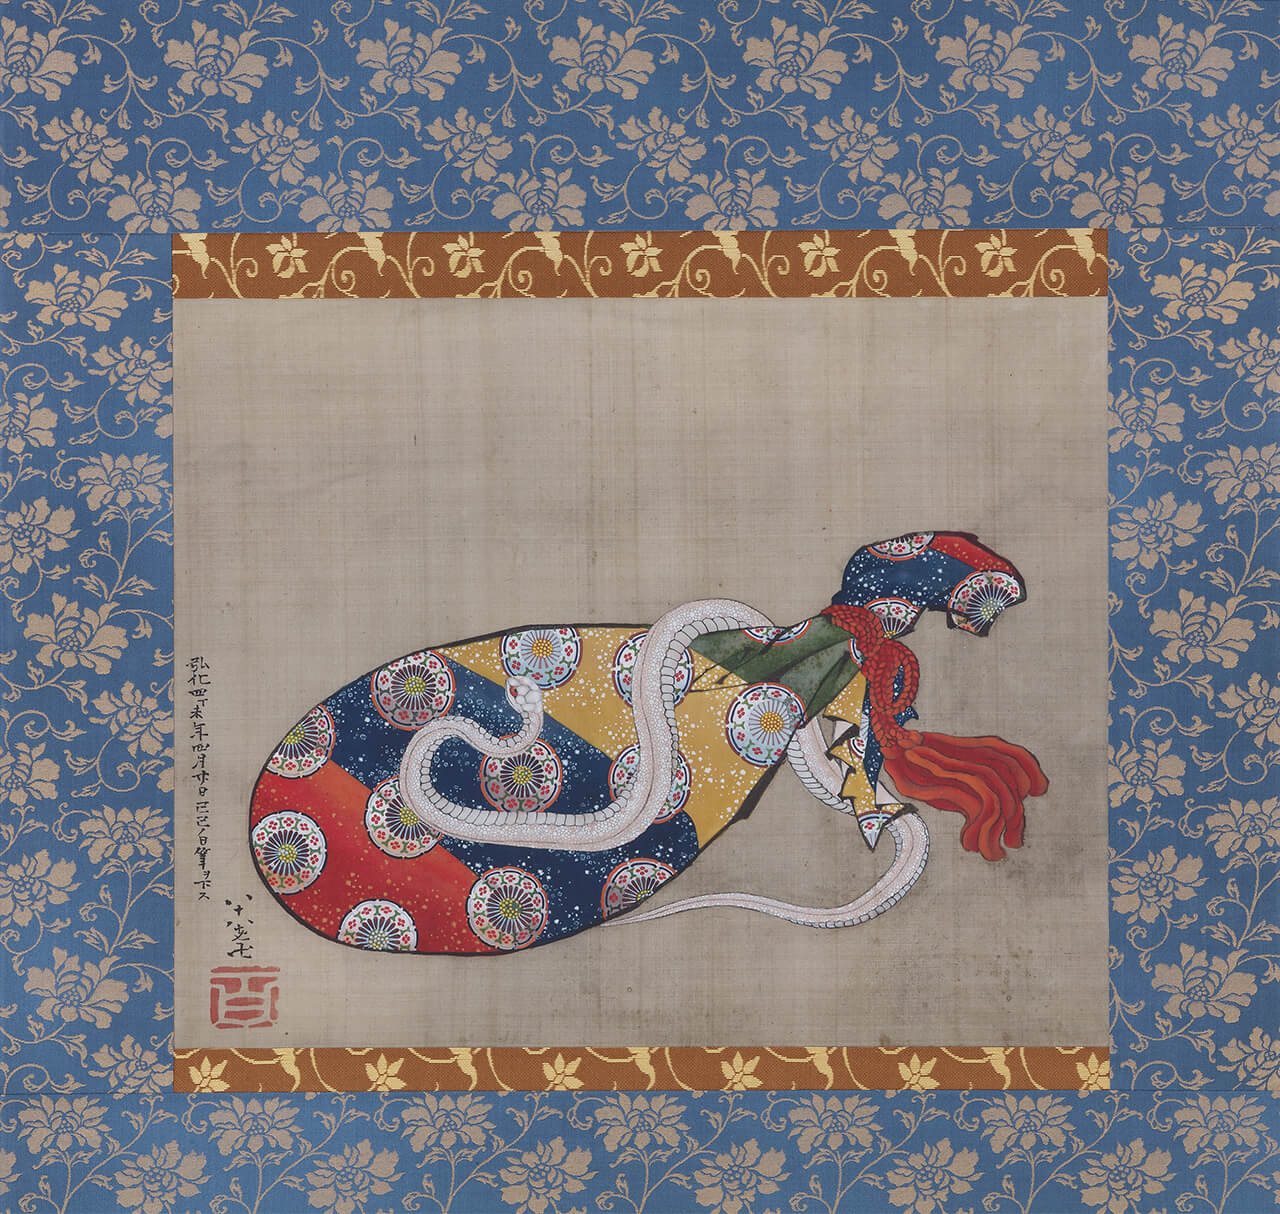 「The Lute and White Snake of Benten (Sarasvati)」 Katsushika Hokusai